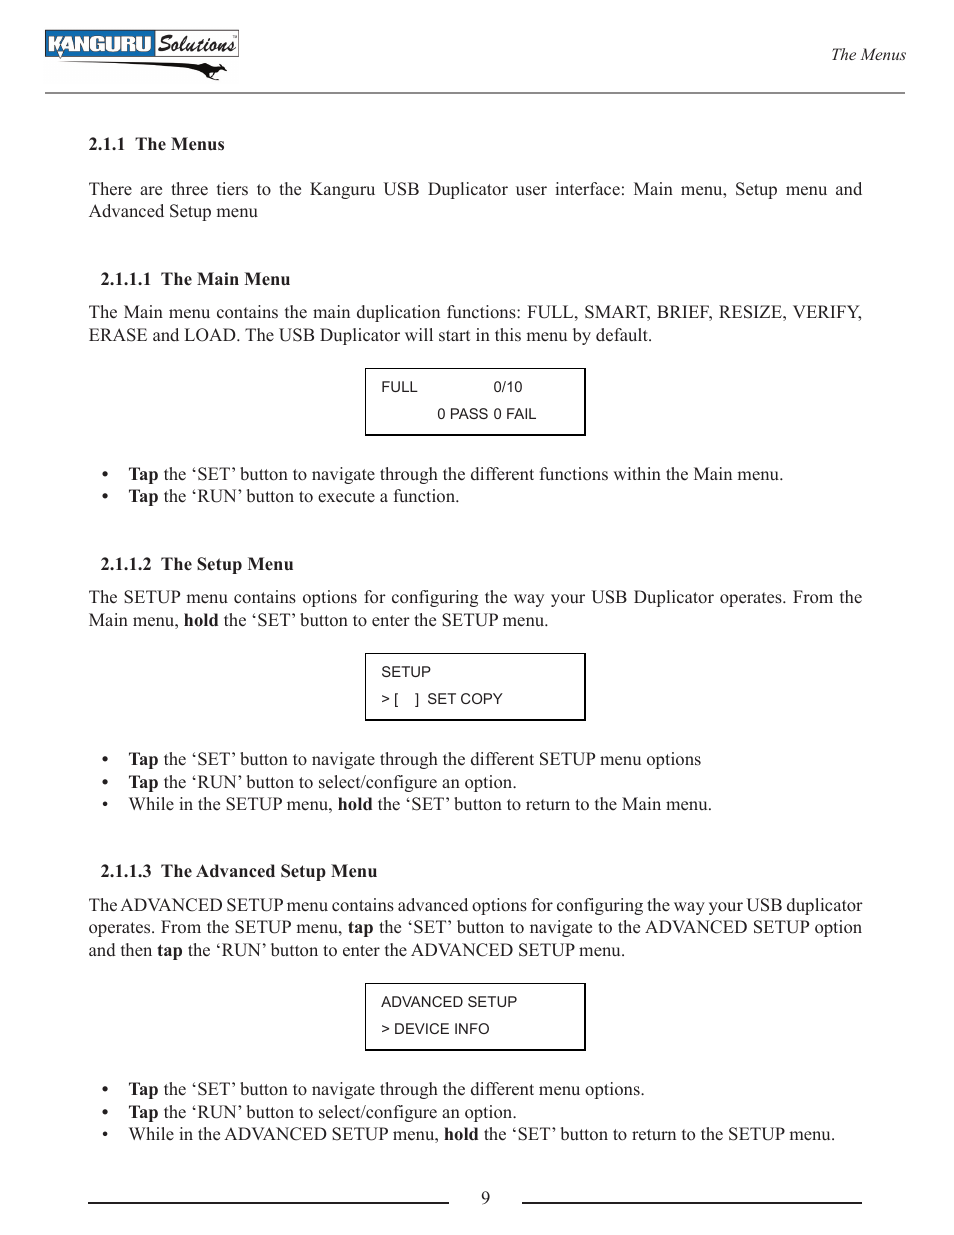 Kanguru U2D User Manual | Page 11 / 40